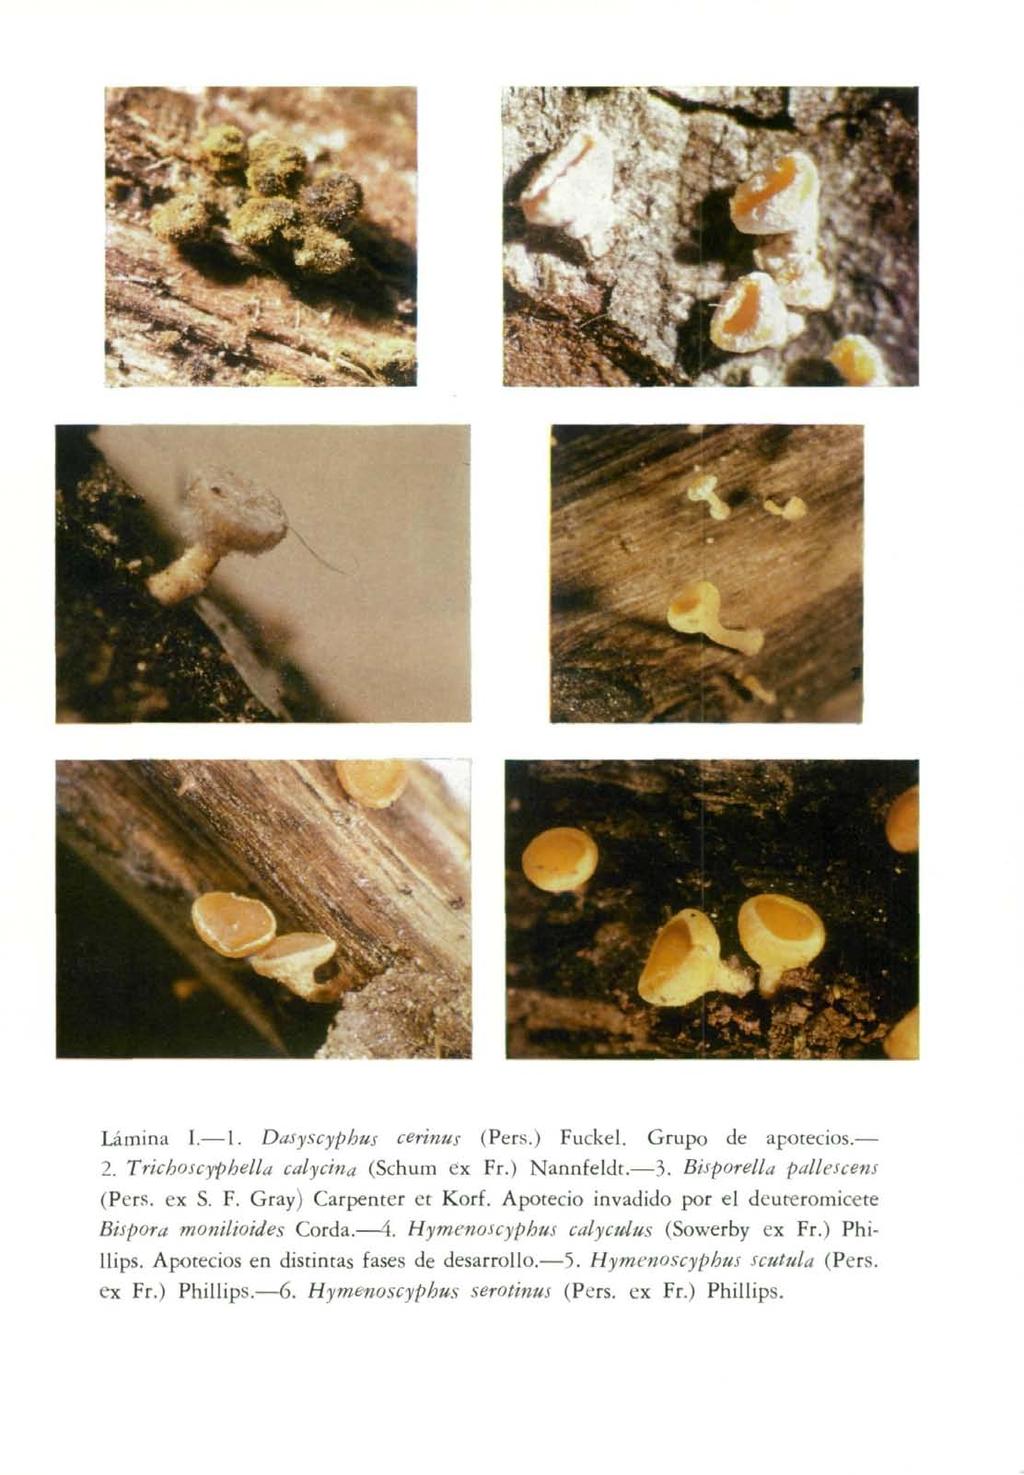 Lámina I. 1. Dasyscyphus cerinus (Pers.) Fuckel. Grupo de apotecios. 2. Trichoscyphella calycina (Schum ex Fr.) Nannfeldt. 3. Bisporella pallescens (Pers. ex S. F. Gray) Carpenter et Korf.